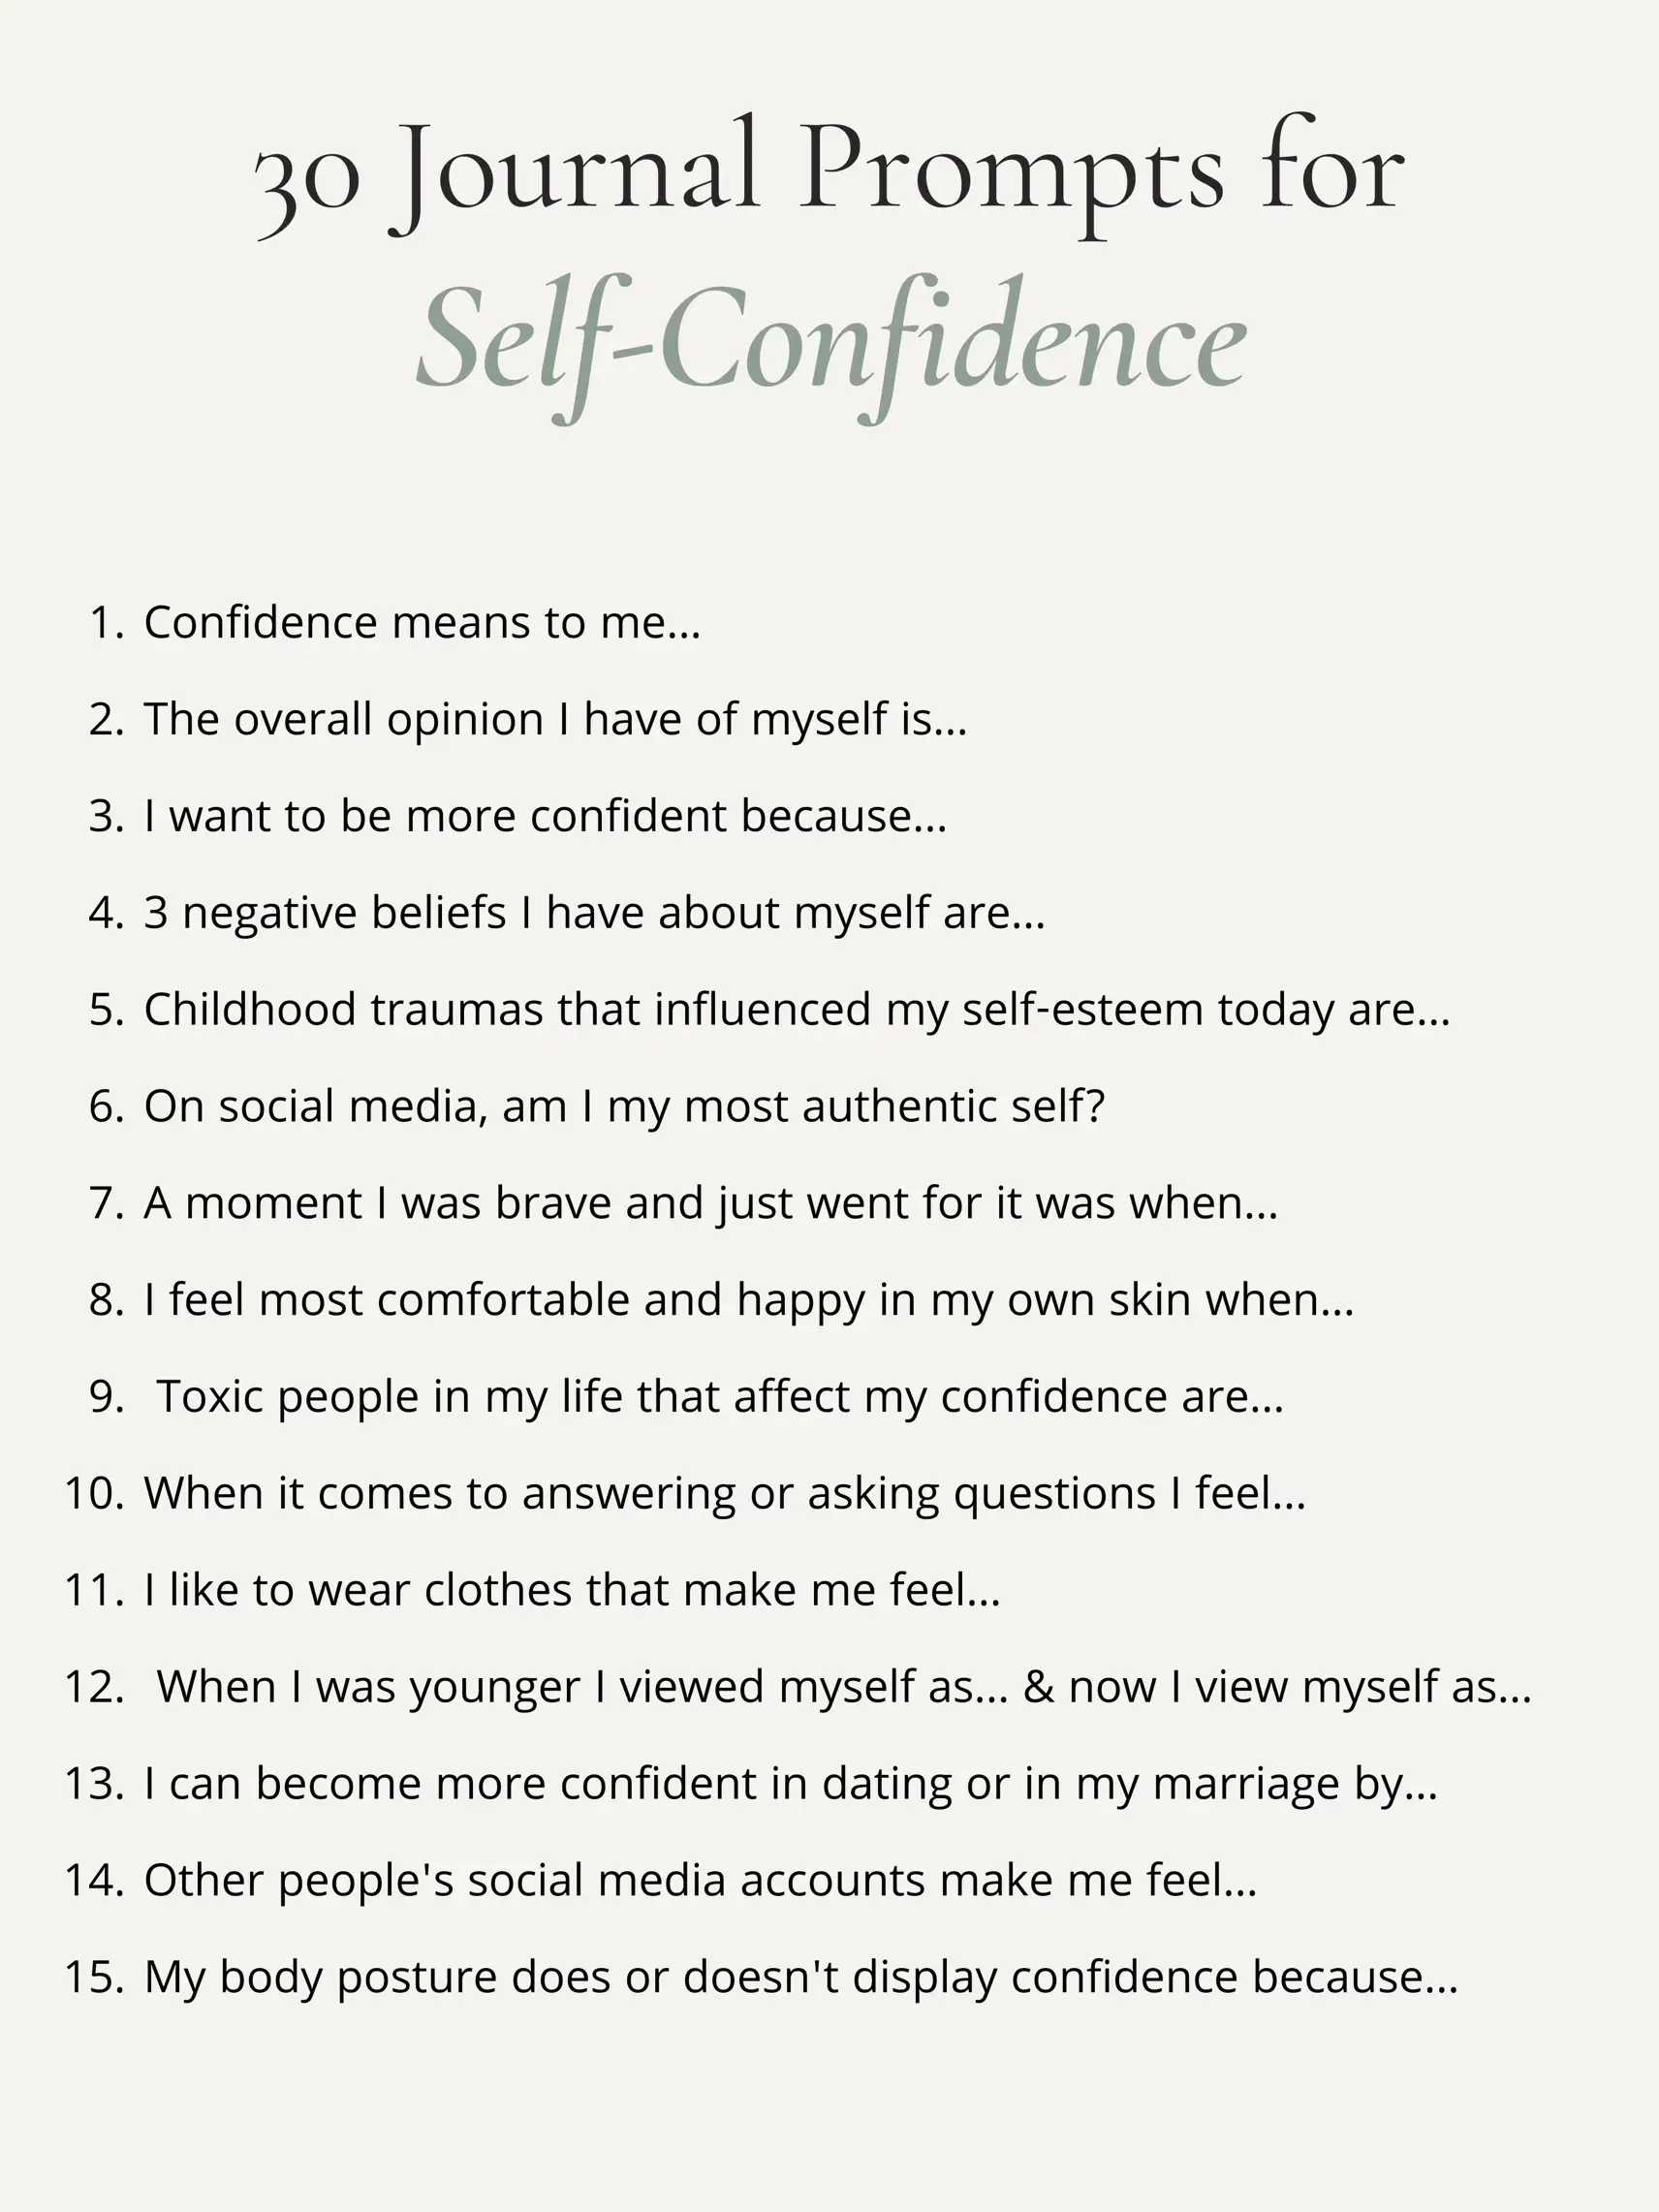 Self Love & Body Confidence